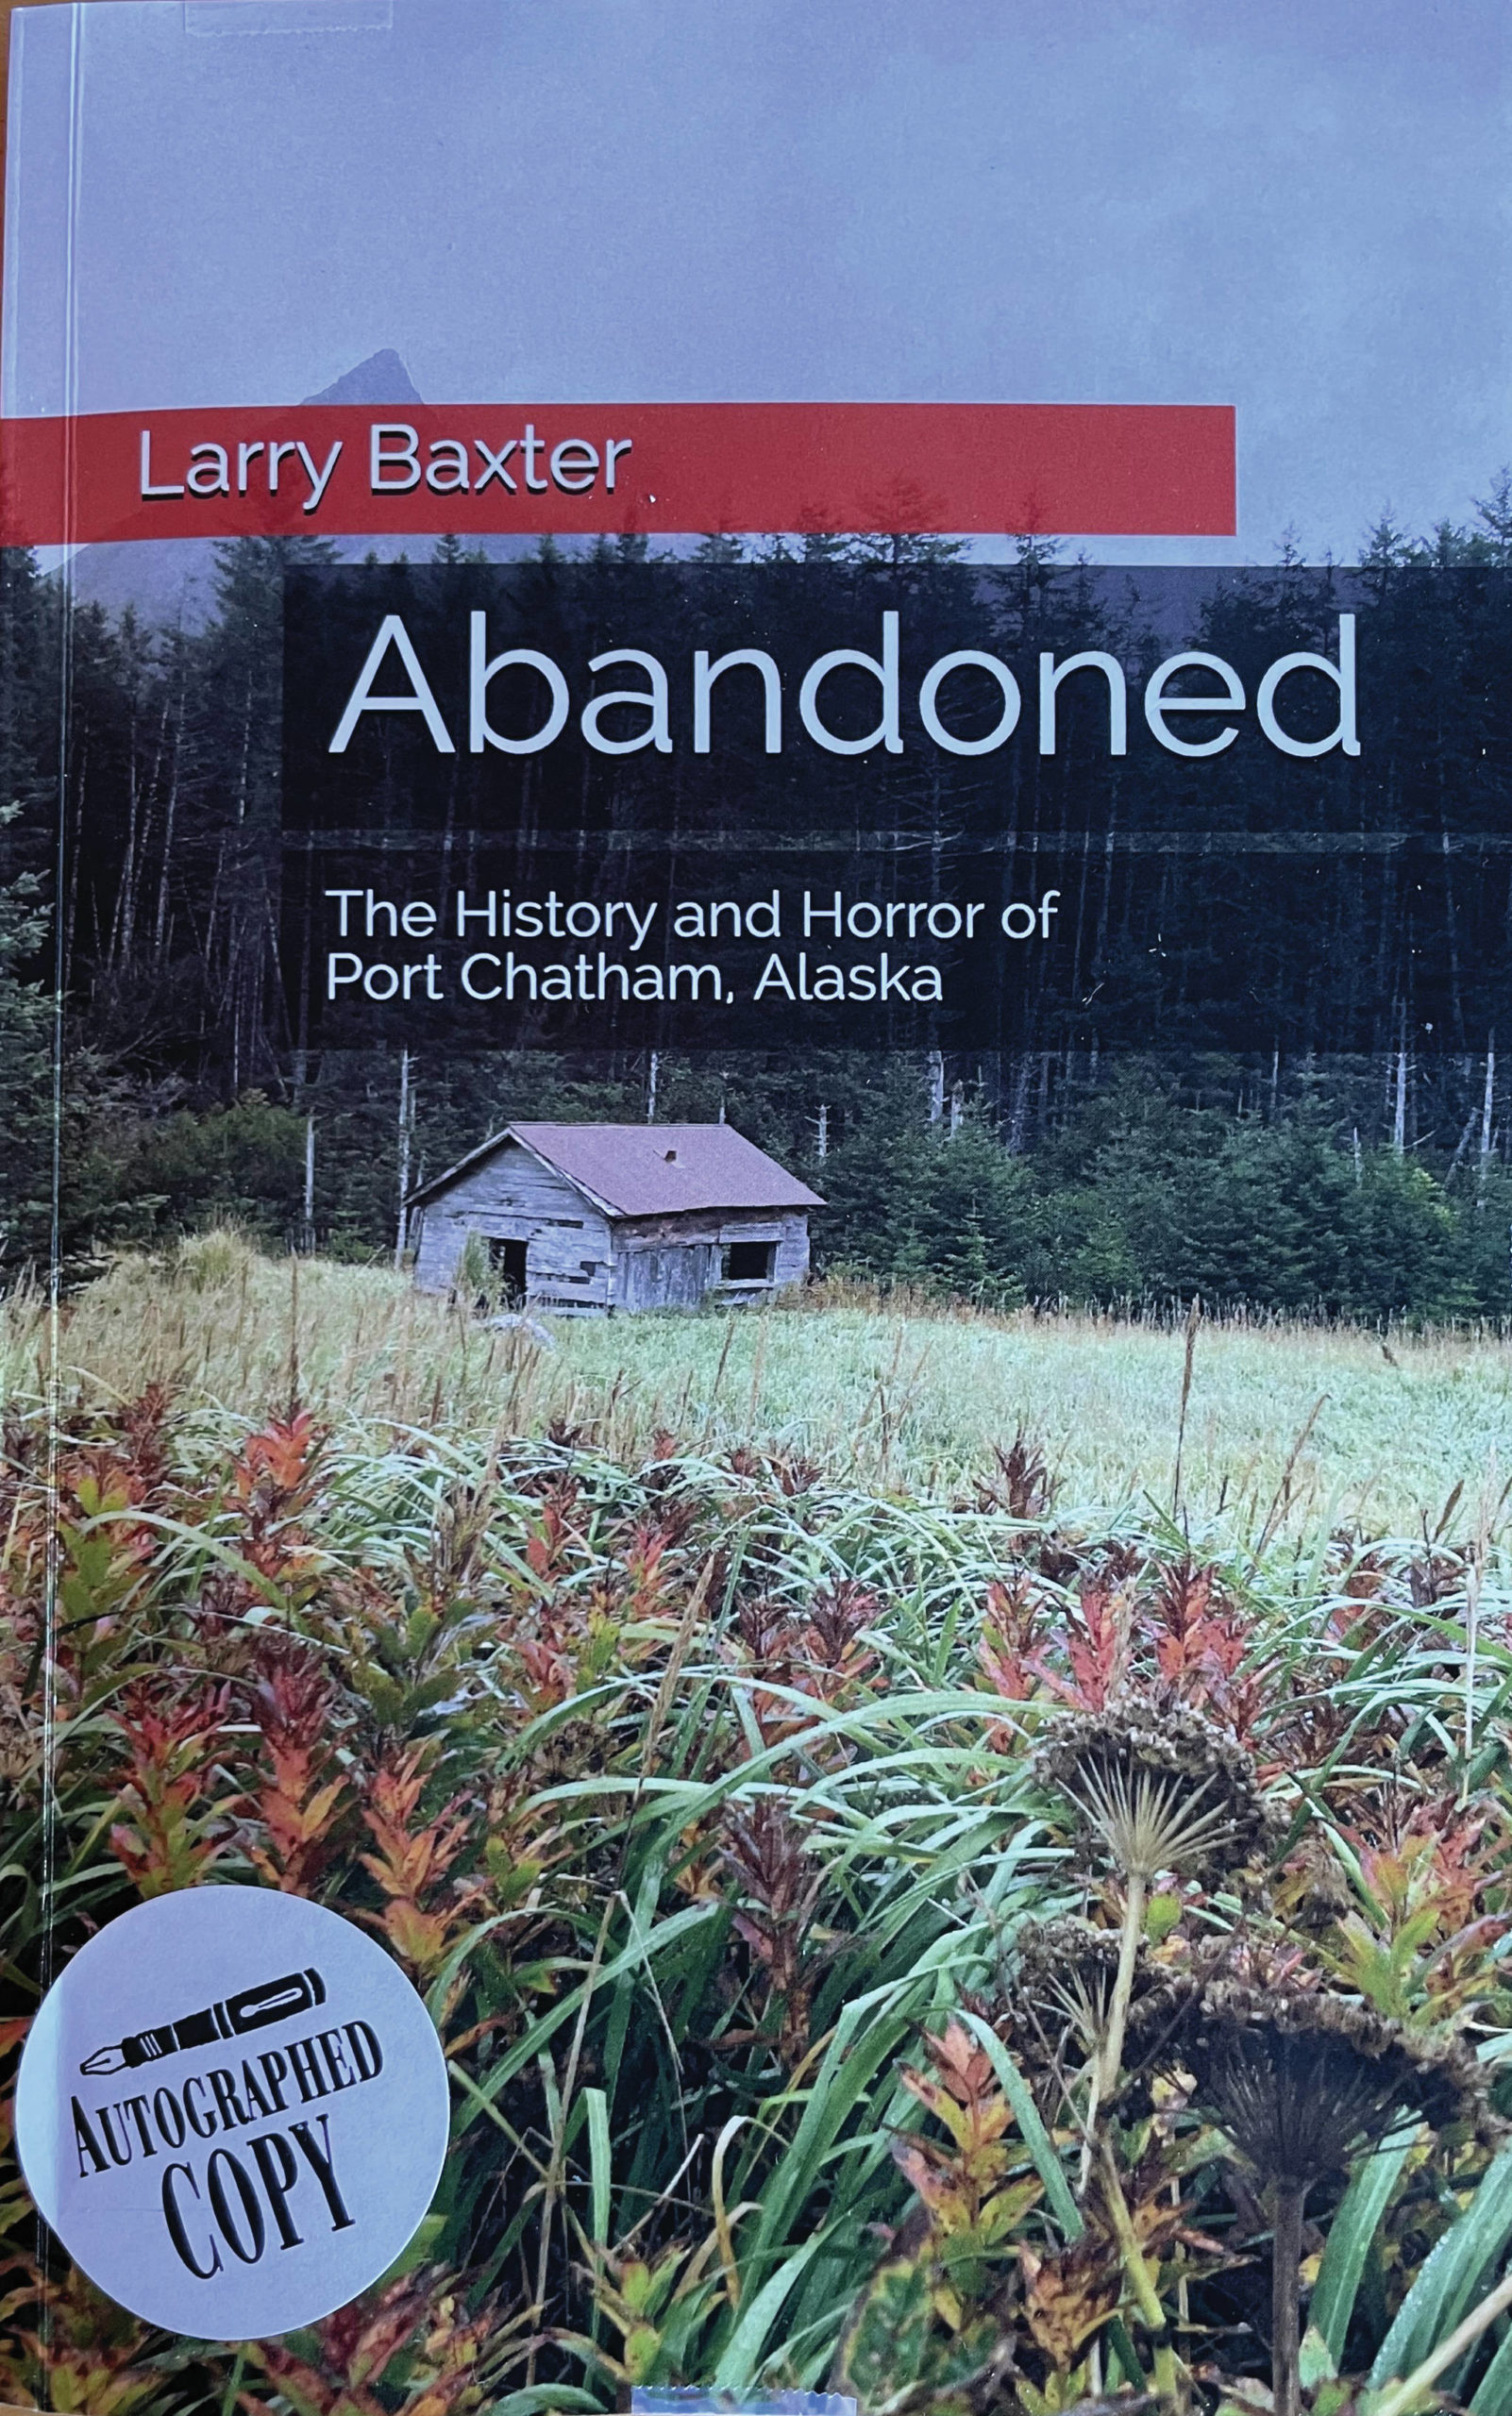 The cover of Larry Baxter’s novel, “Abandoned.” (Photo by McKibben Jackinsky)